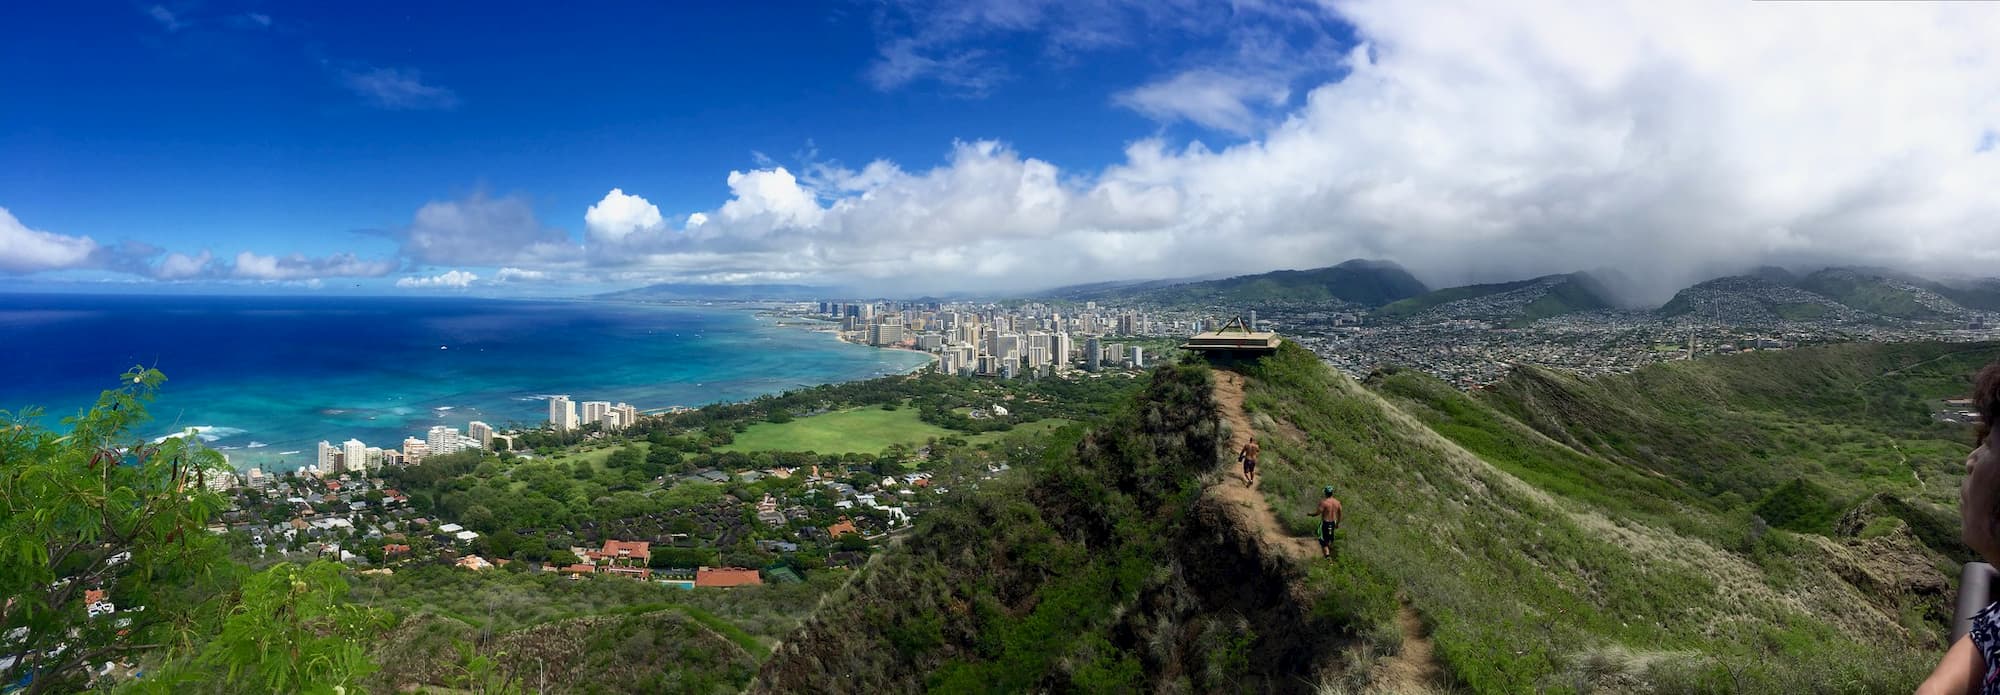 Best Hiking in Hawaii